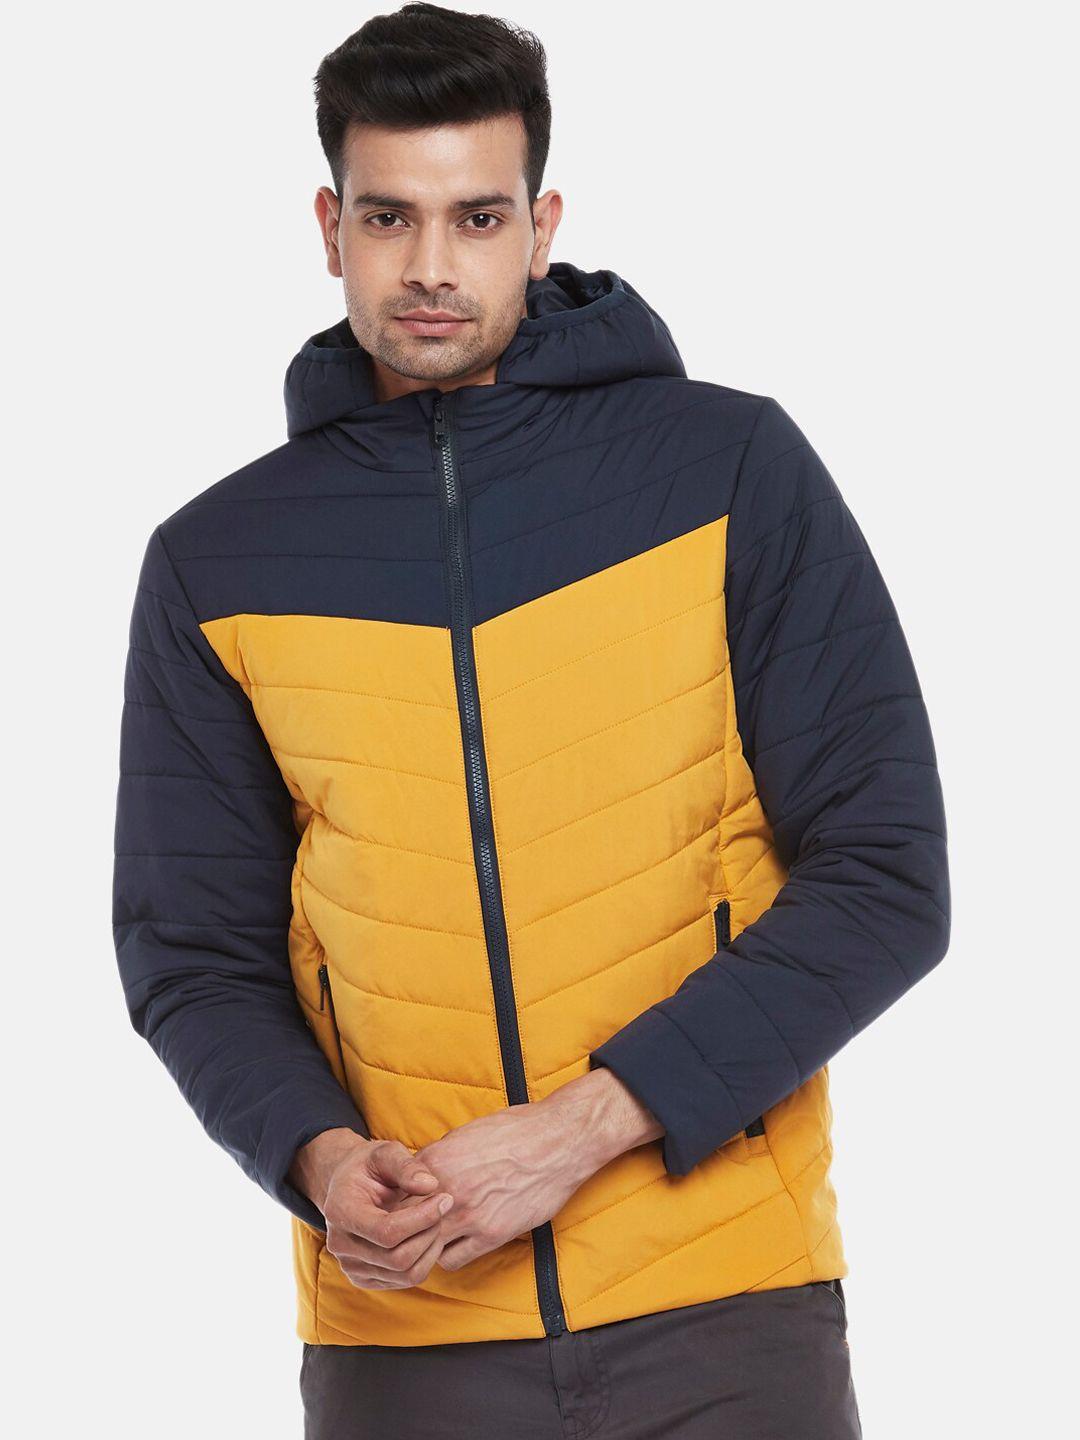 urban ranger by pantaloons men mustard yellow & navy blue colourblocked padded jacket